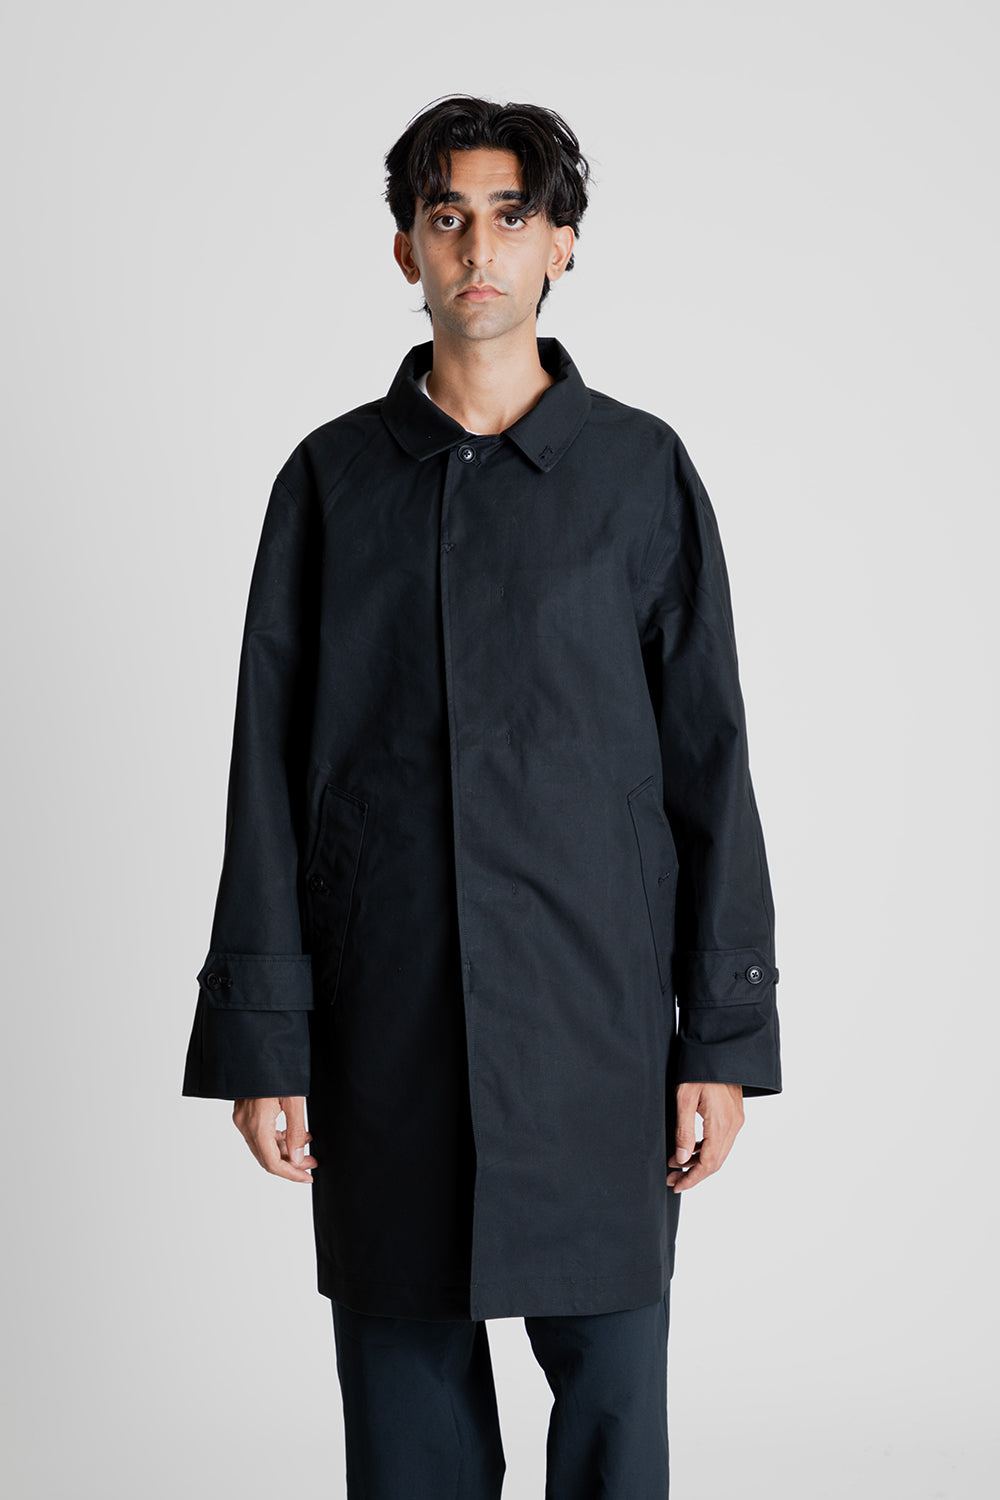 Nanamica GORE-TEX Soutien Collar Coat in Black